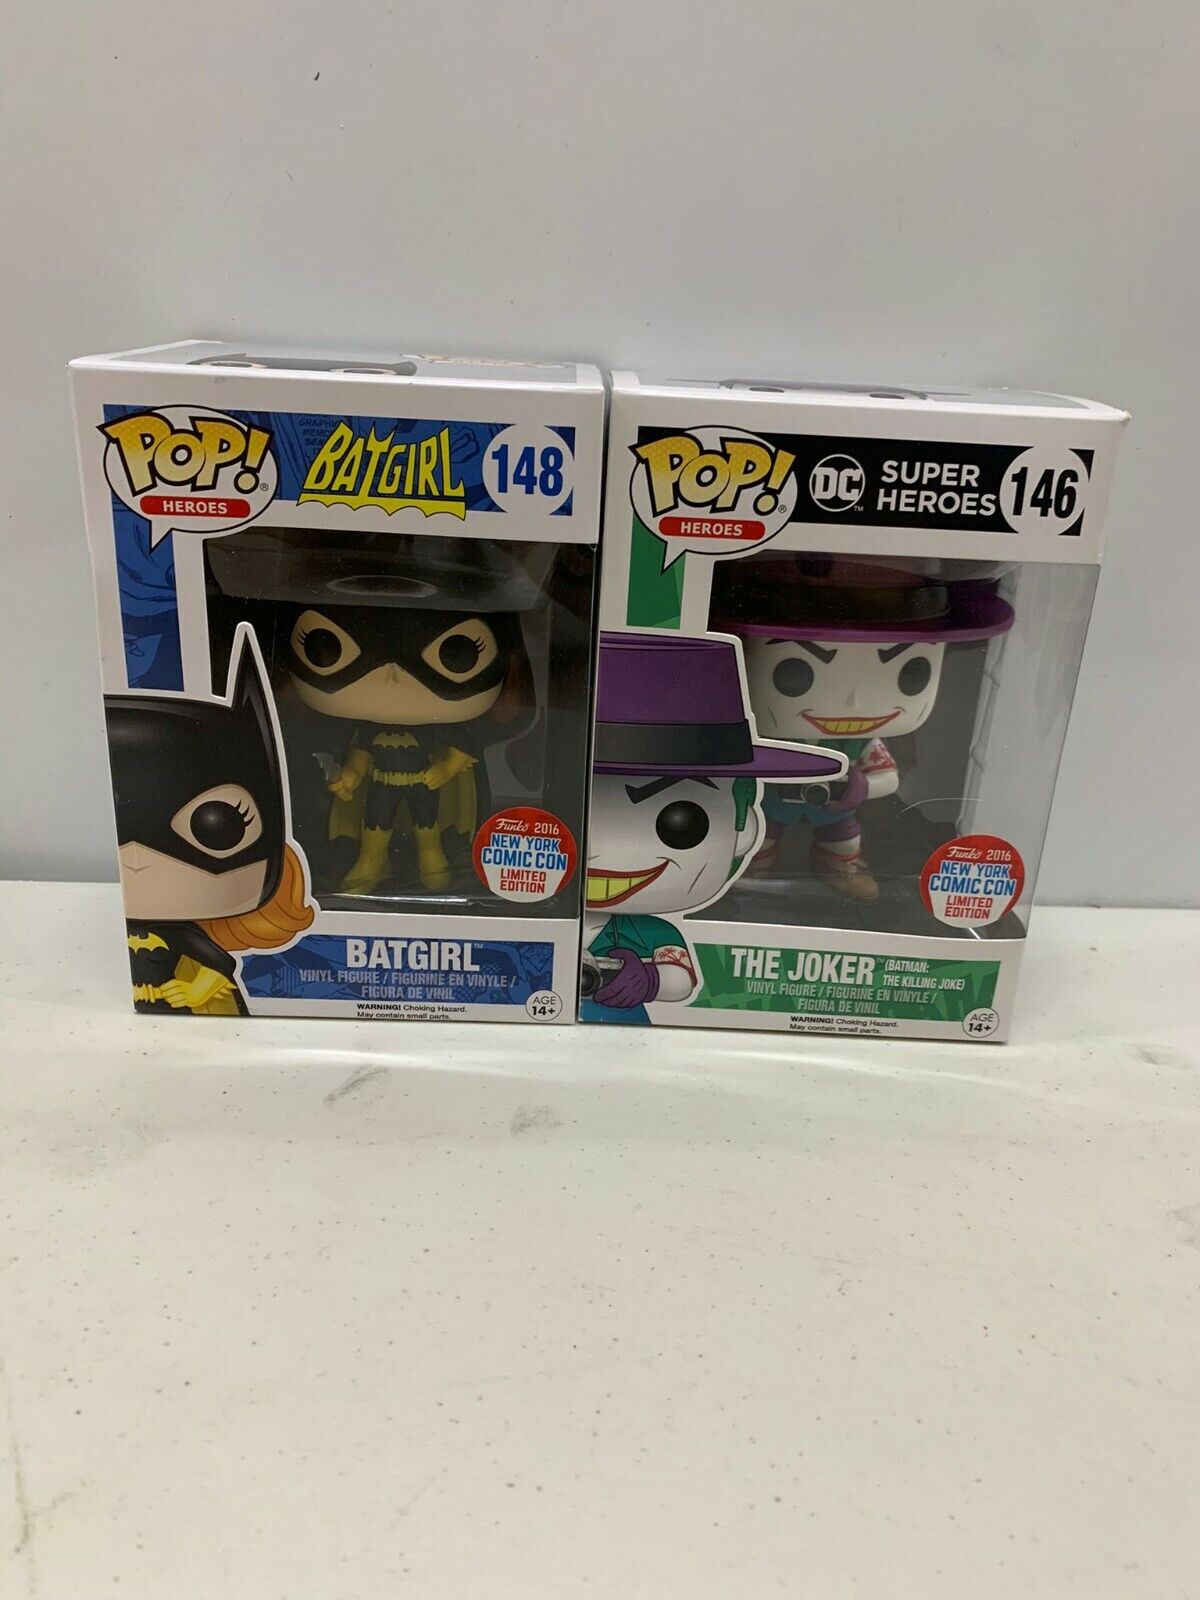 Funko Pop DC Super Heroes lot of 2: Batgirl 148 and The Joker 146